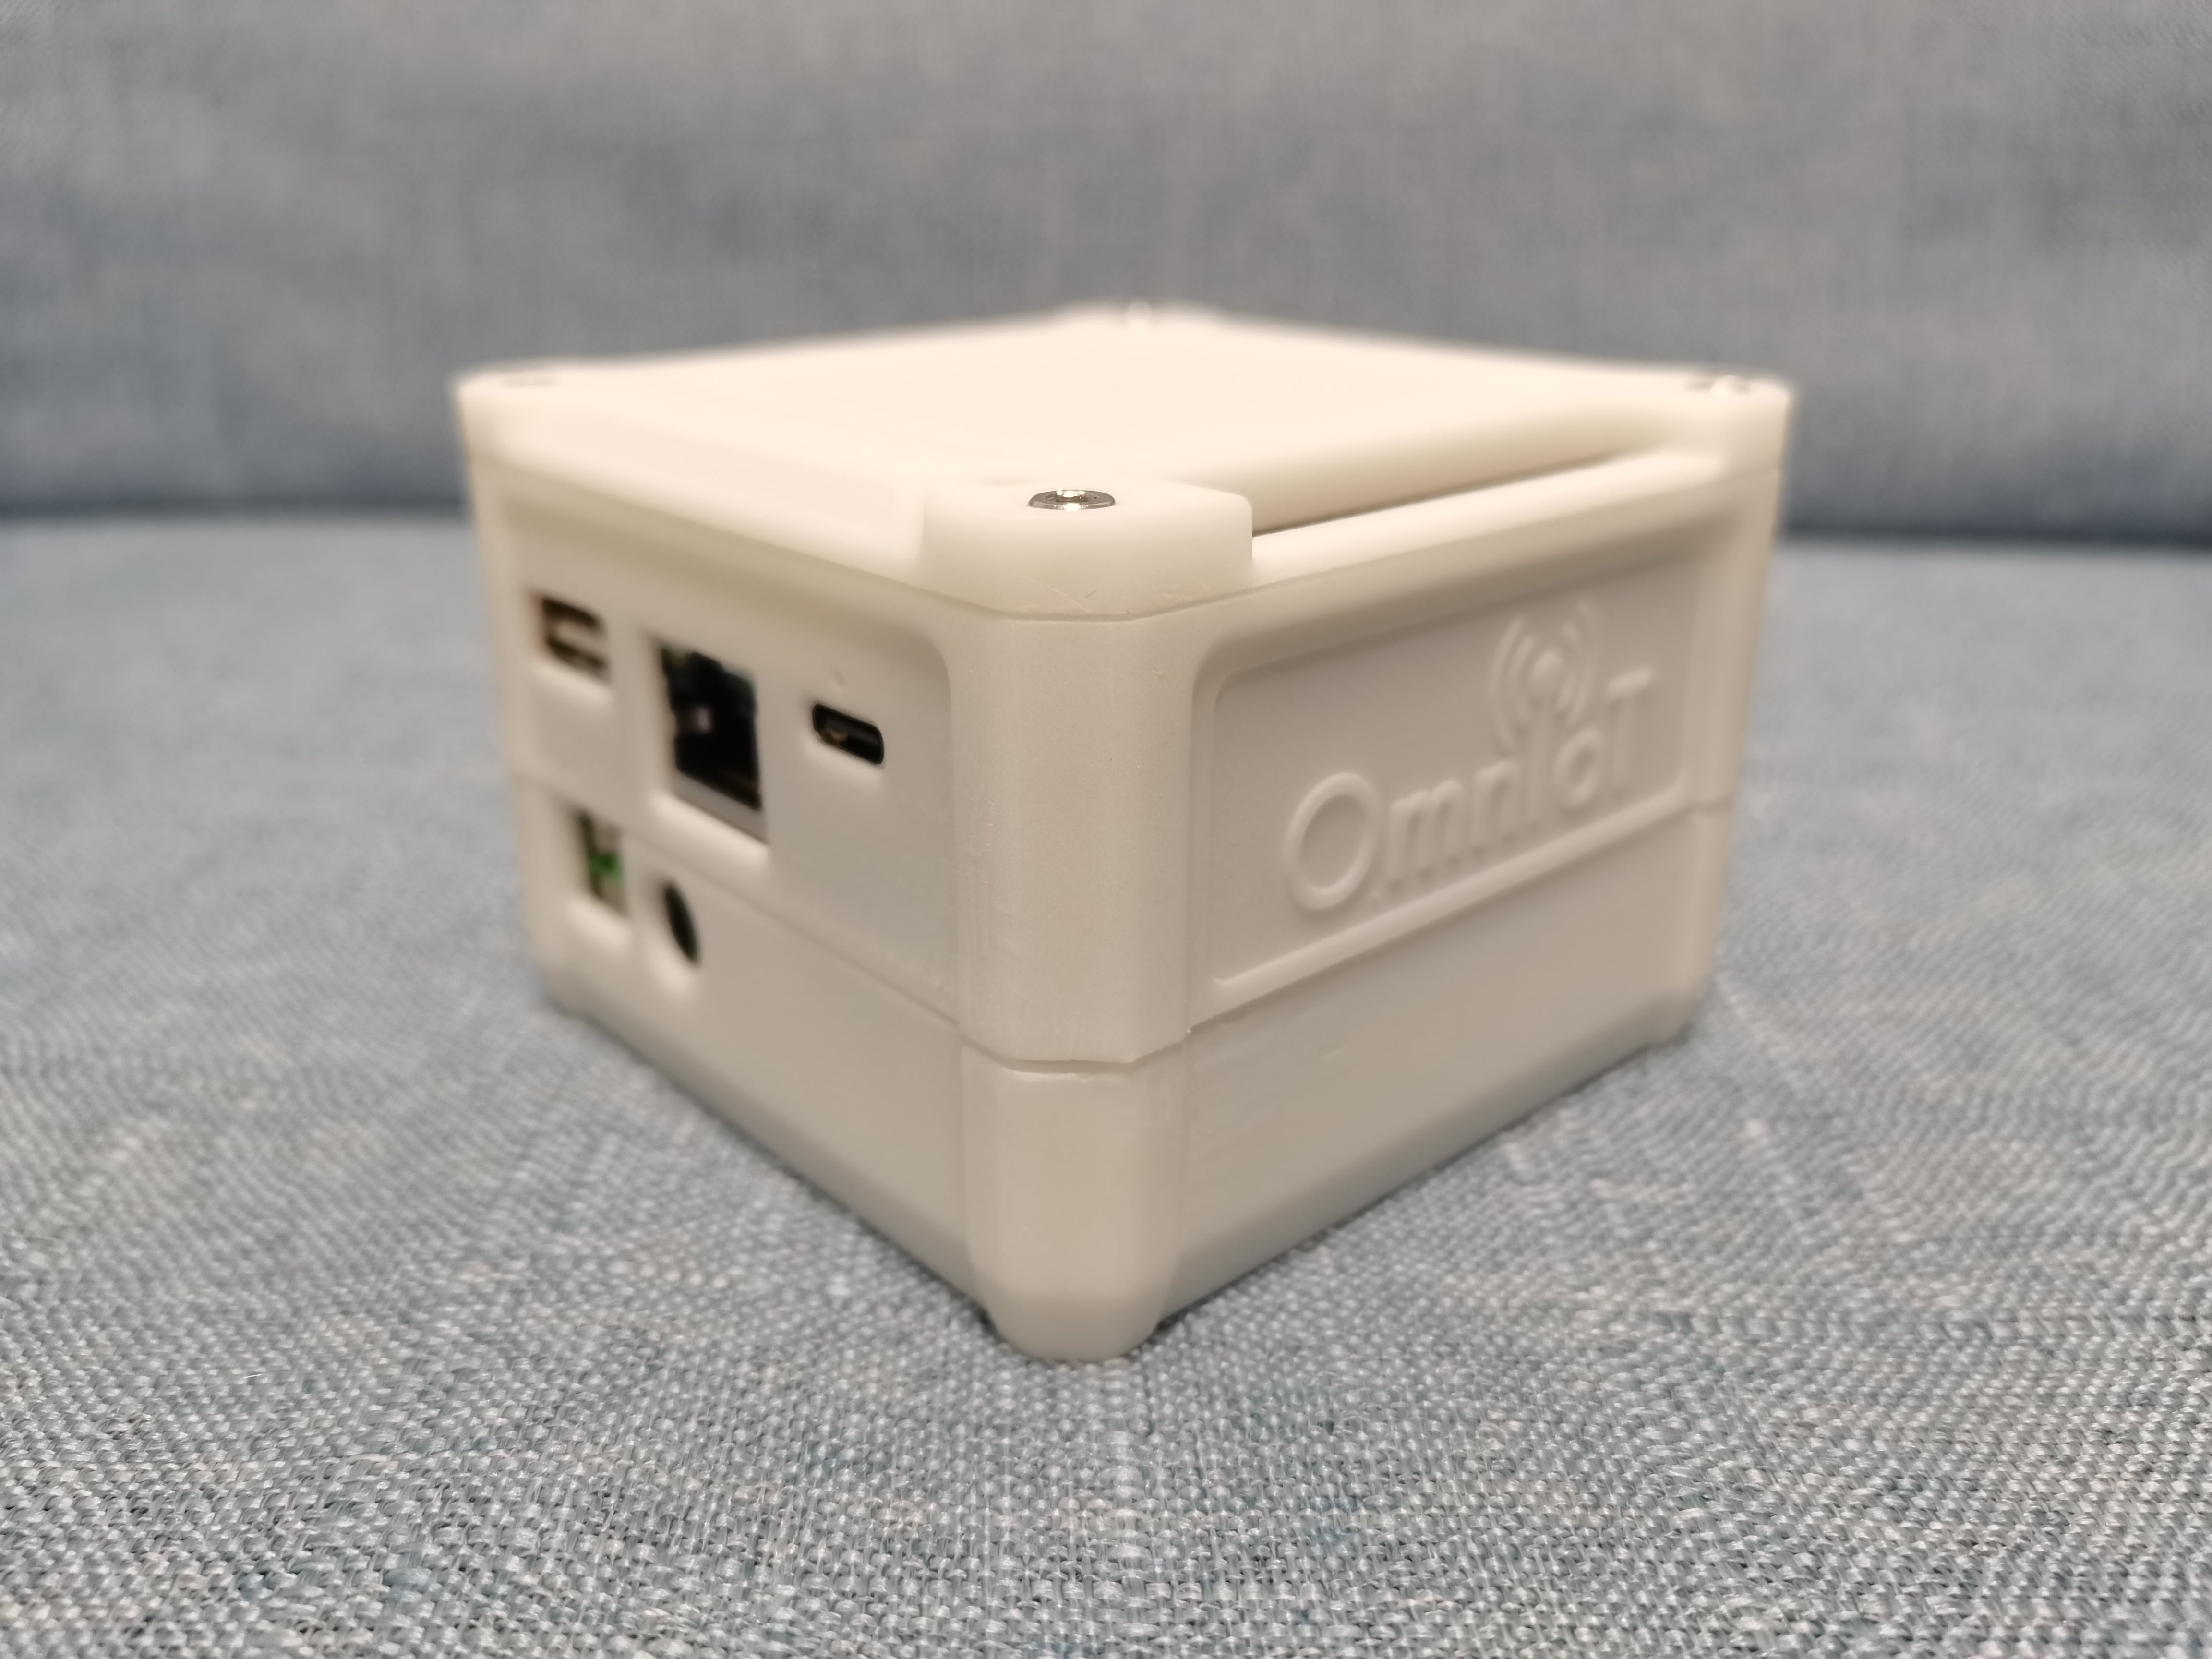 OmniKit - Edge modular IoT gateway